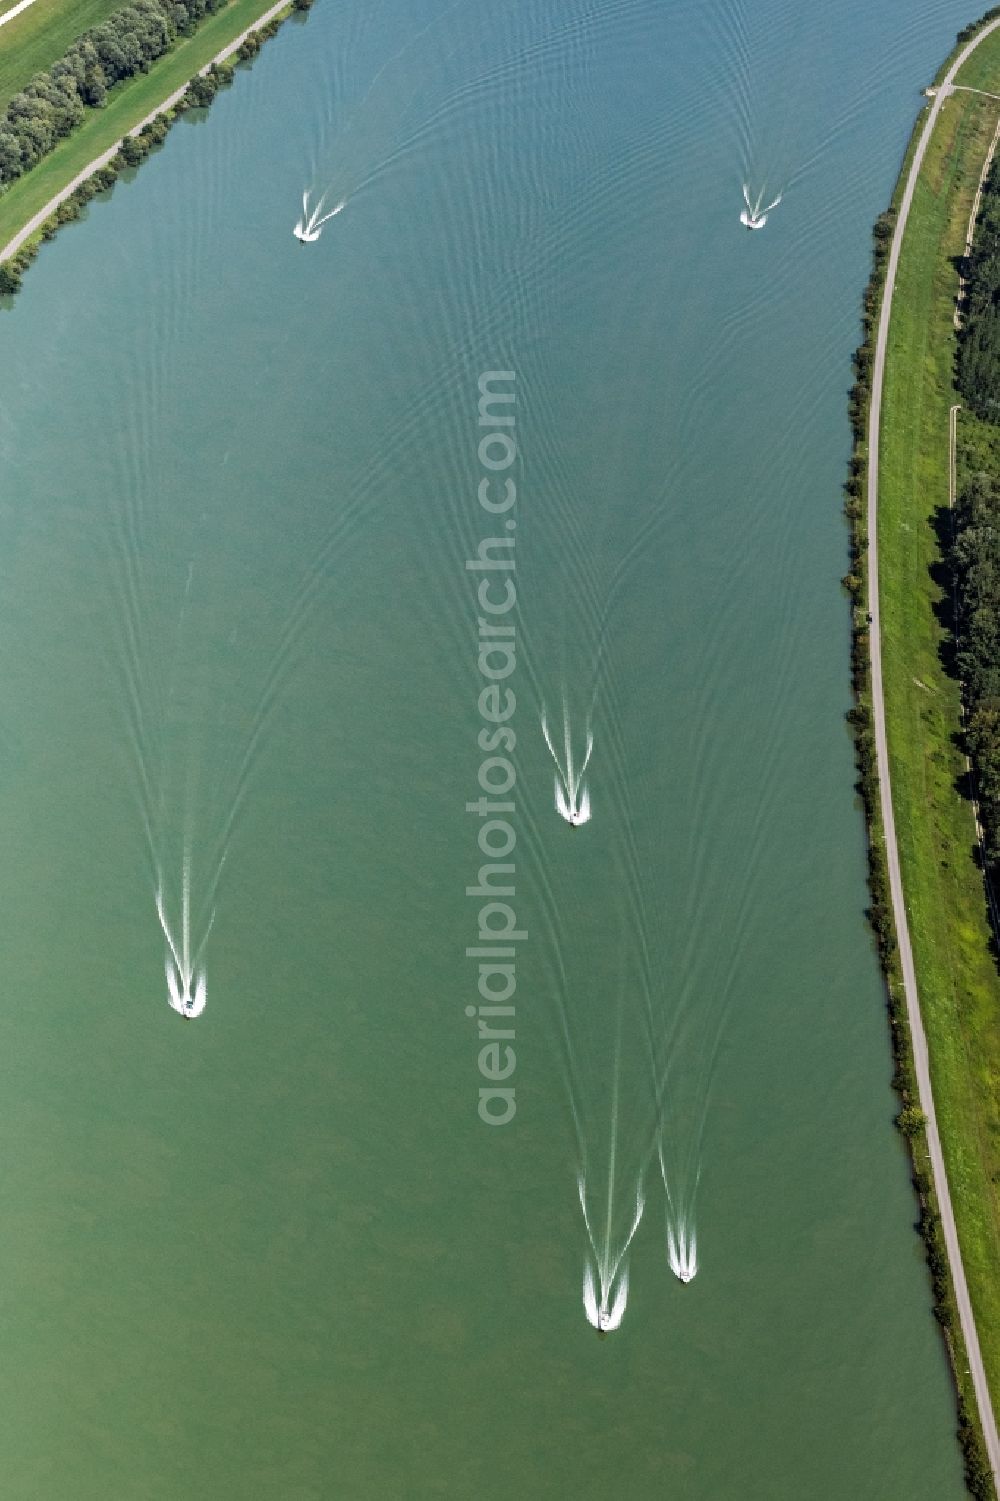 Aerial photograph Strengberg - Sport boat - rowing boat ride in auf of Donau in Strengberg in Lower Austria, Austria